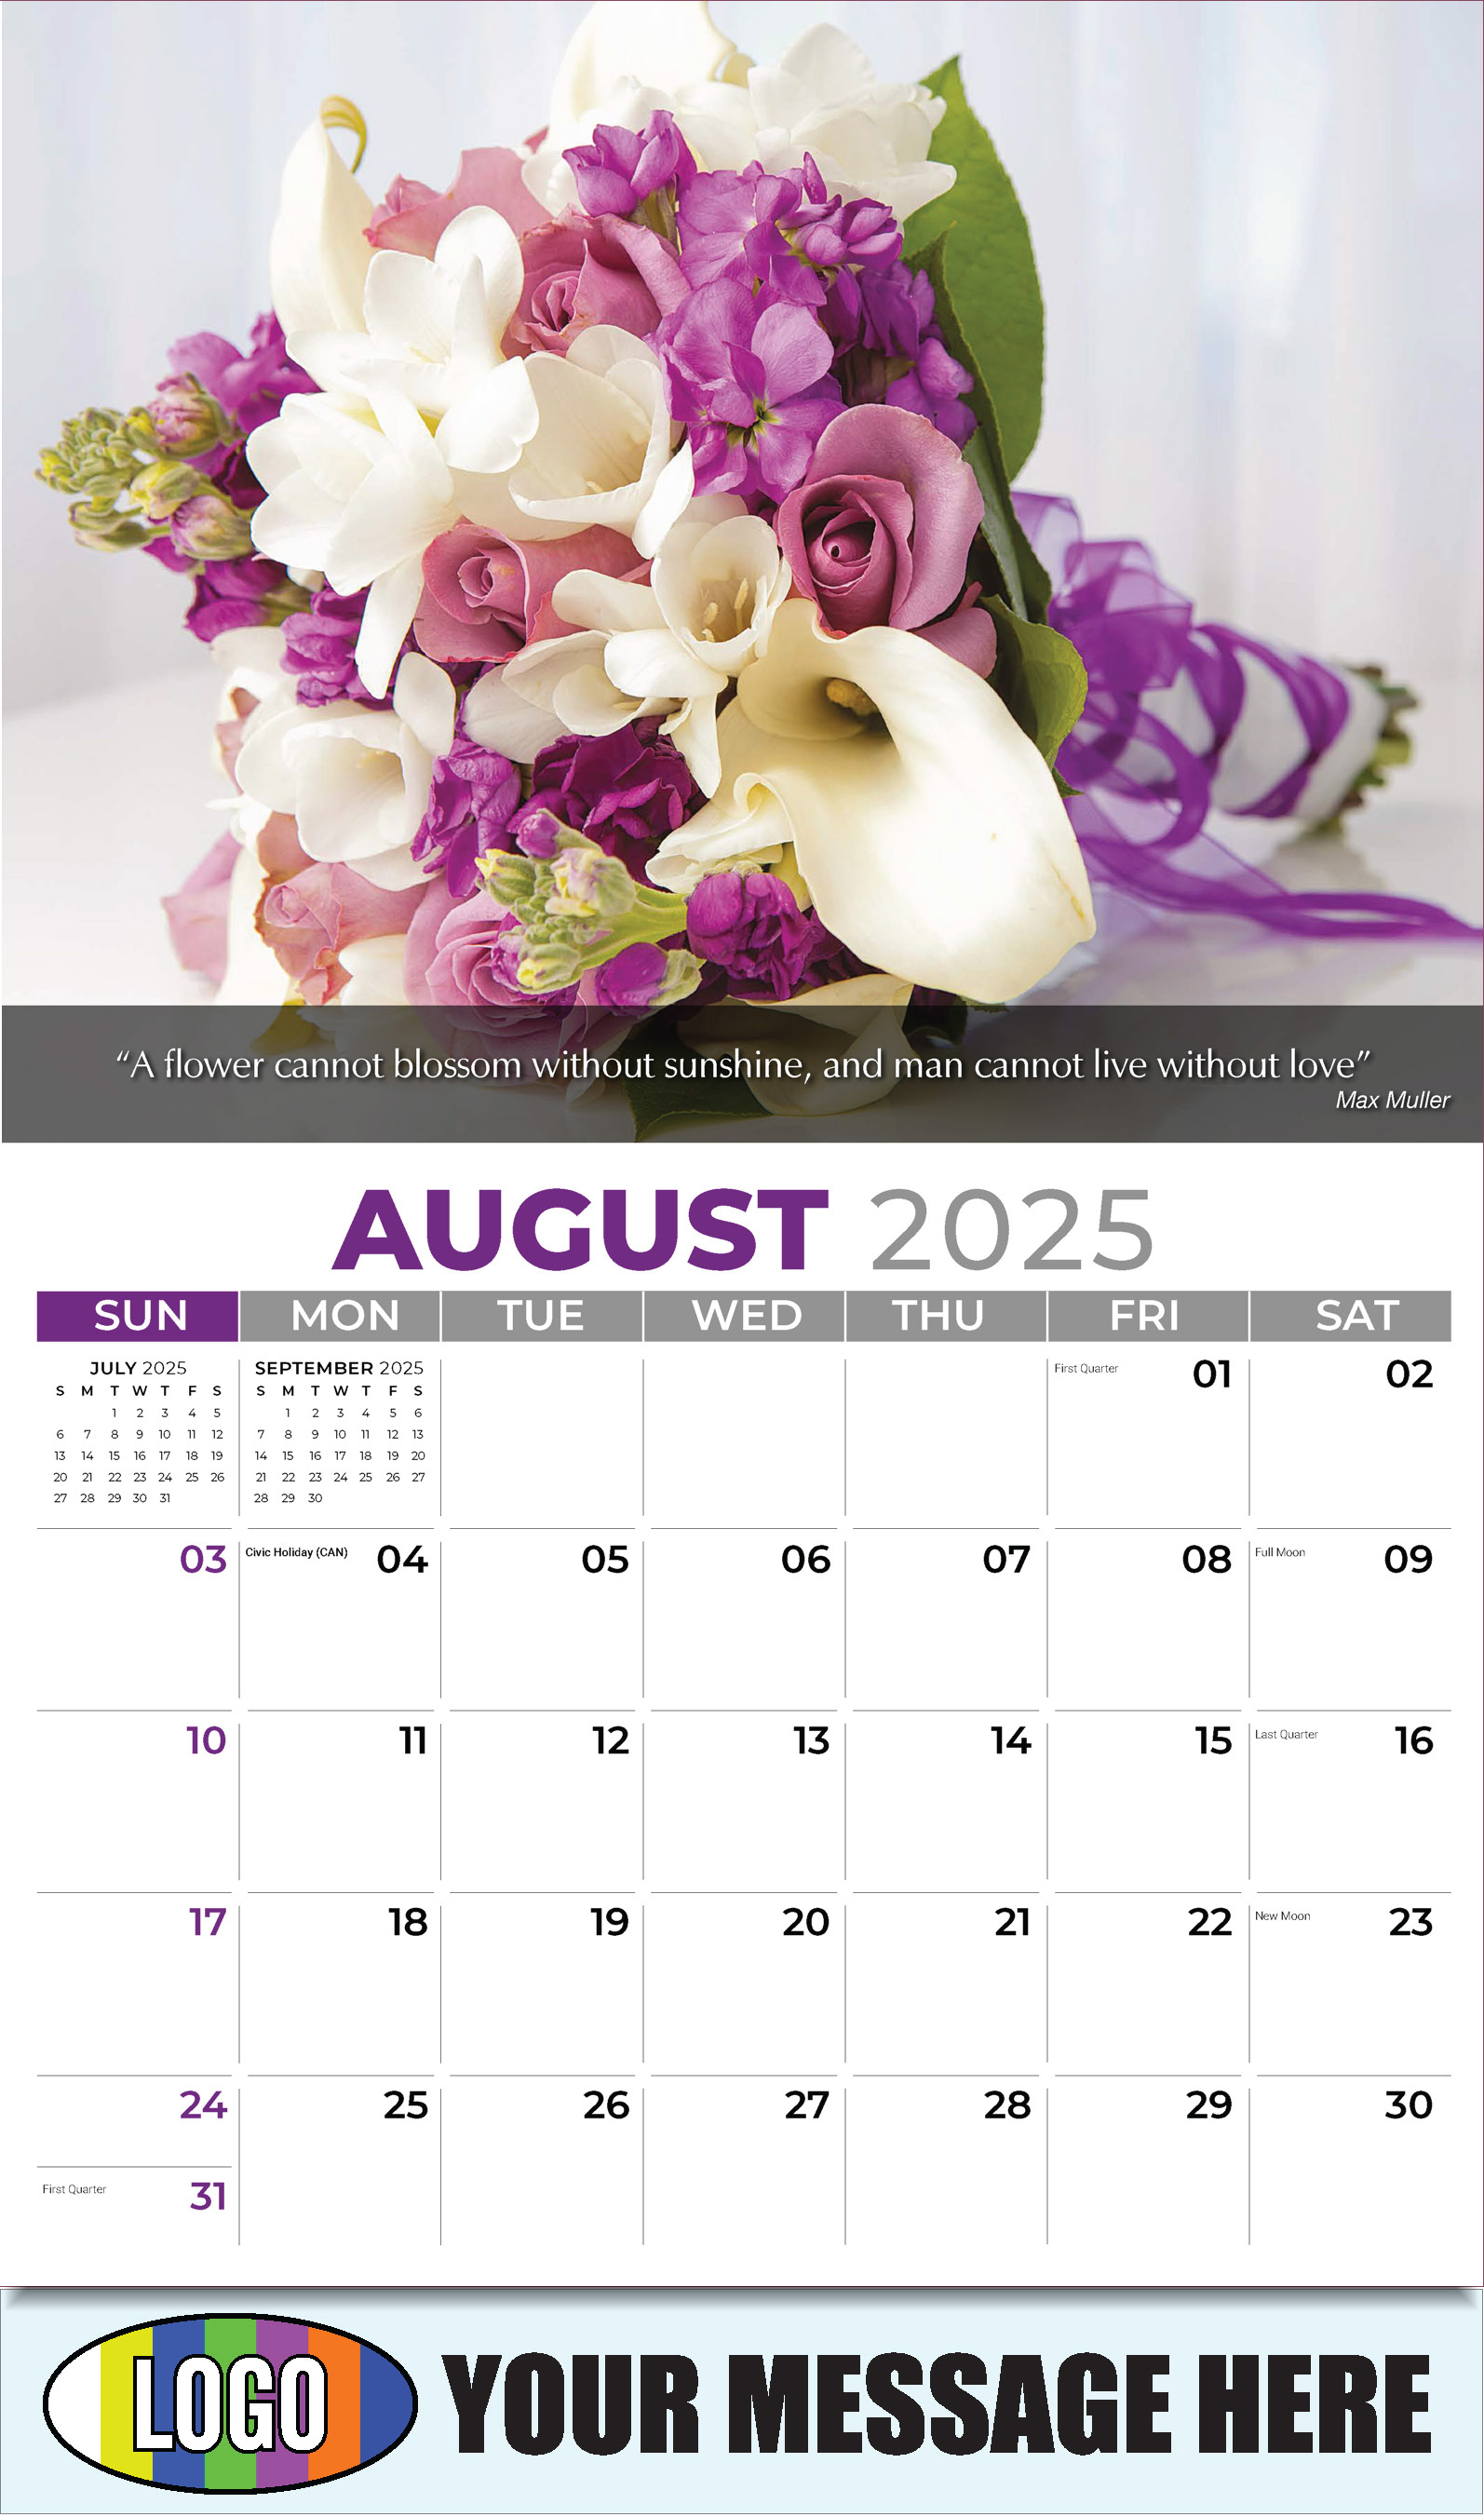 Flowers and Gardens 2025 Business Advertising Calendar - August